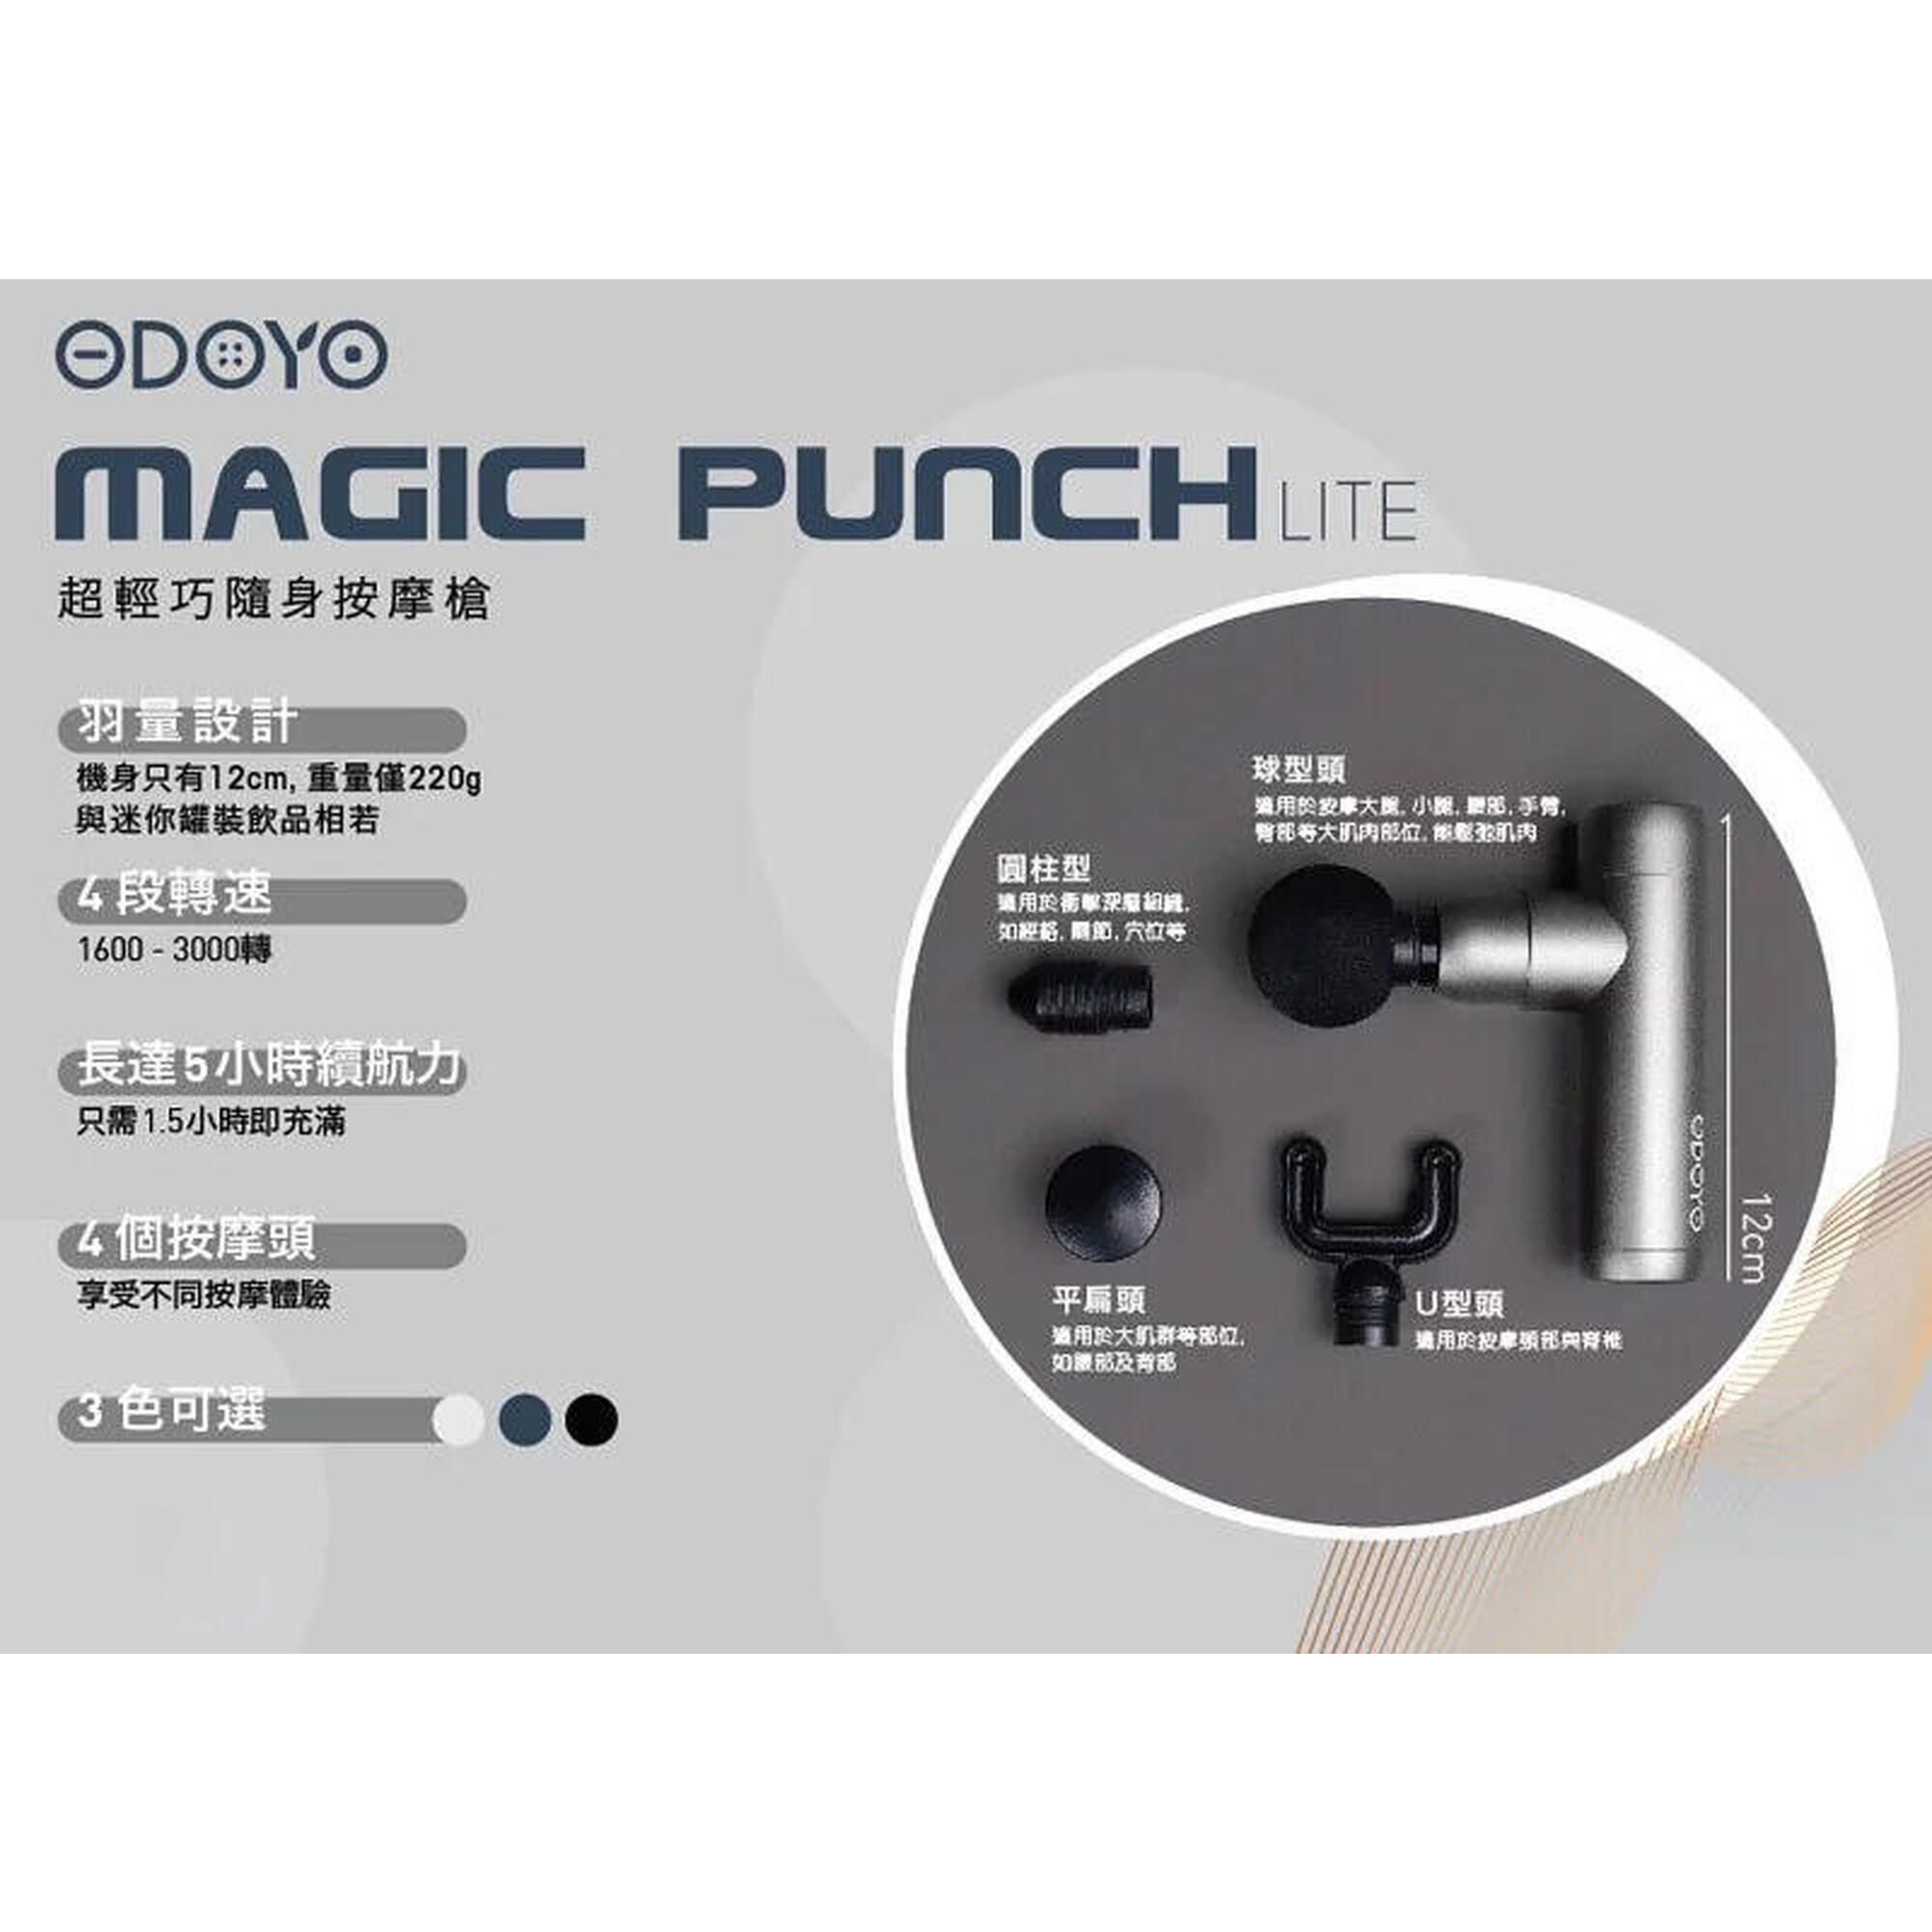 Magic Punch Lite 超輕巧隨身按摩槍 - 灰色